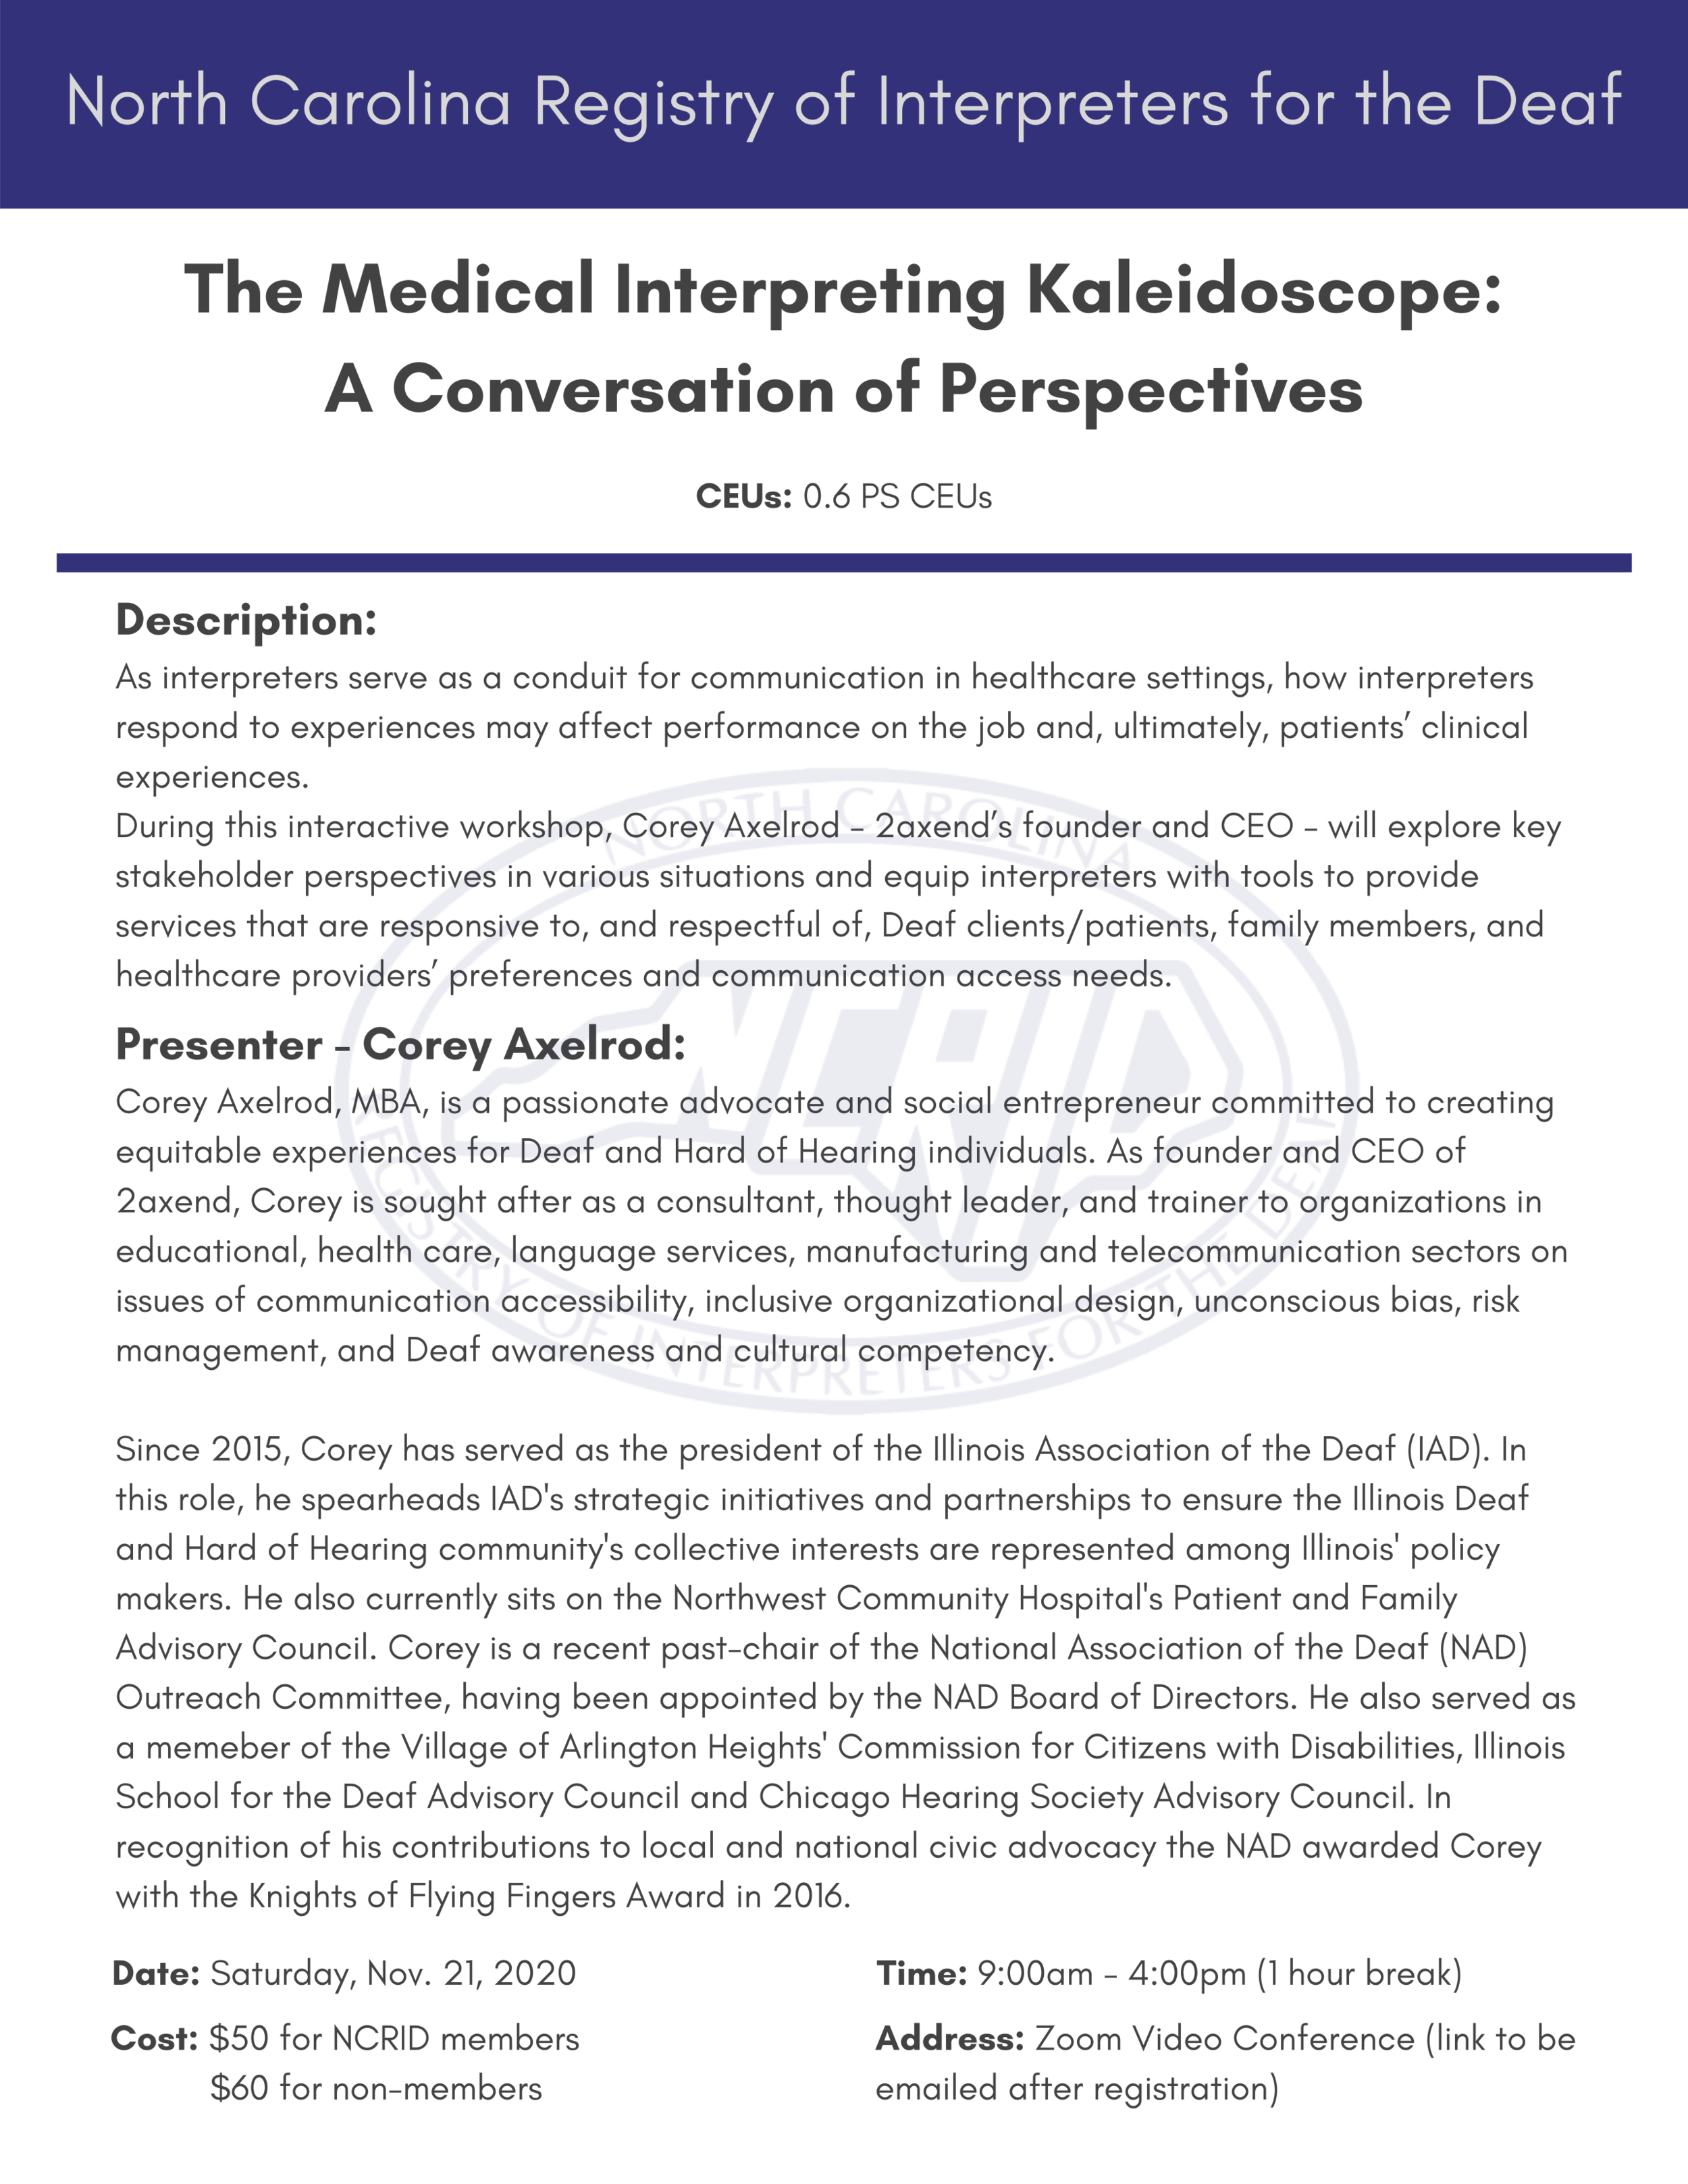 Medical Interpreting Kaleidoscope 11-21 1.png